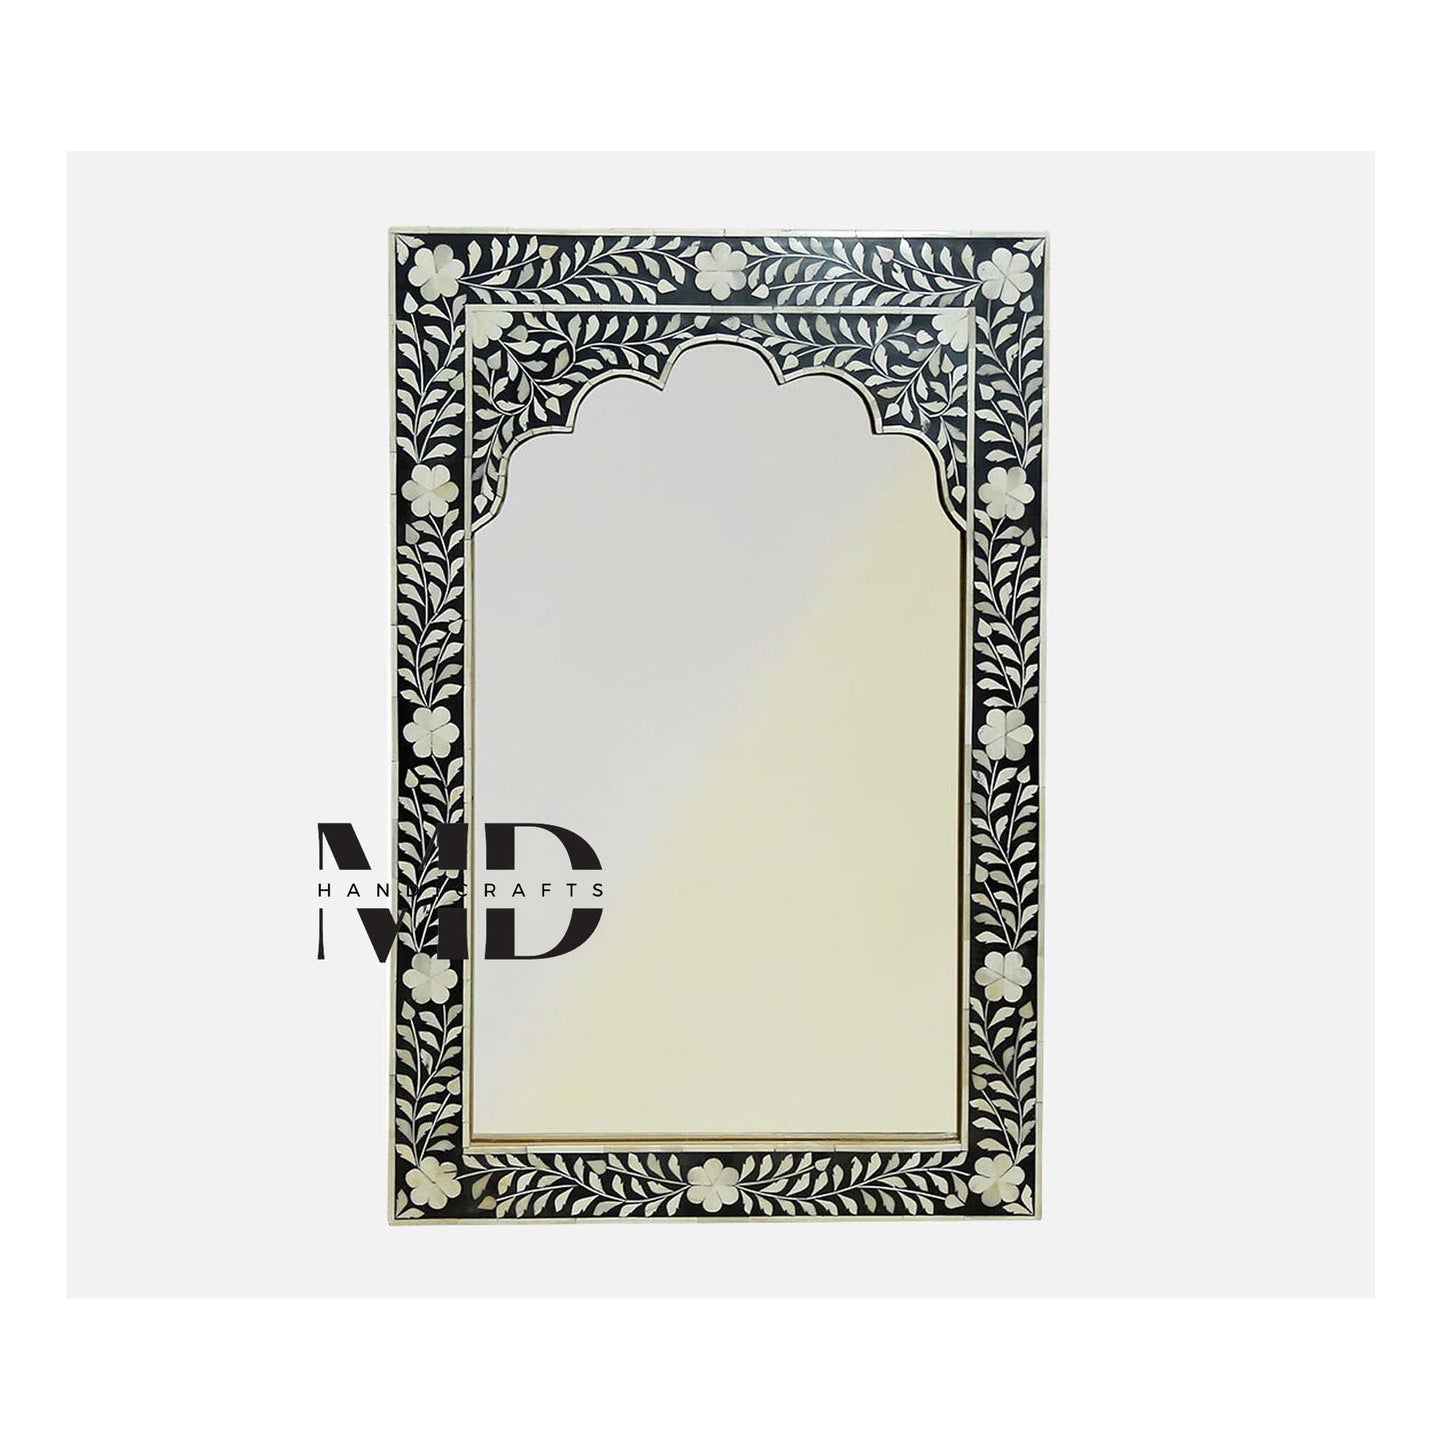 Bone Inlay Mirror Frame / wall decor / mirror  In Floral Pattern